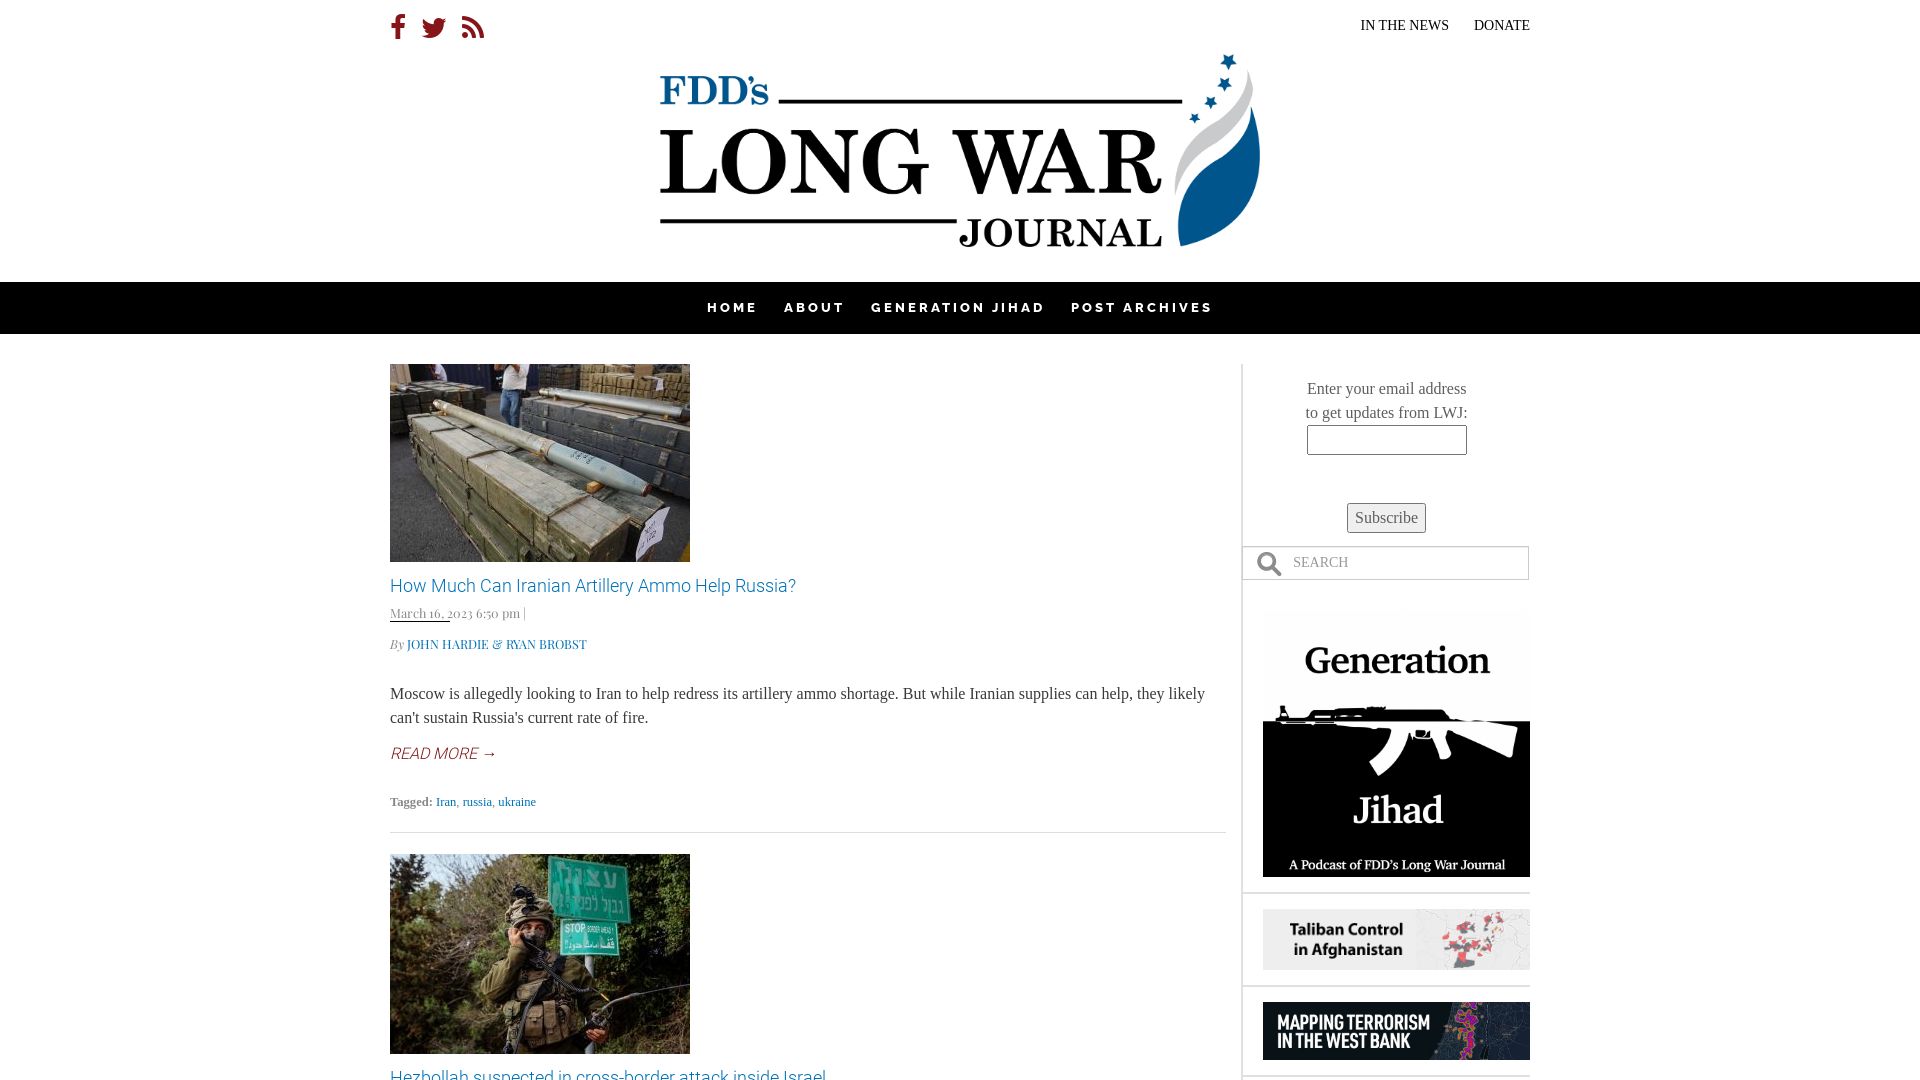 Estado web longwarjournal.org está   ONLINE